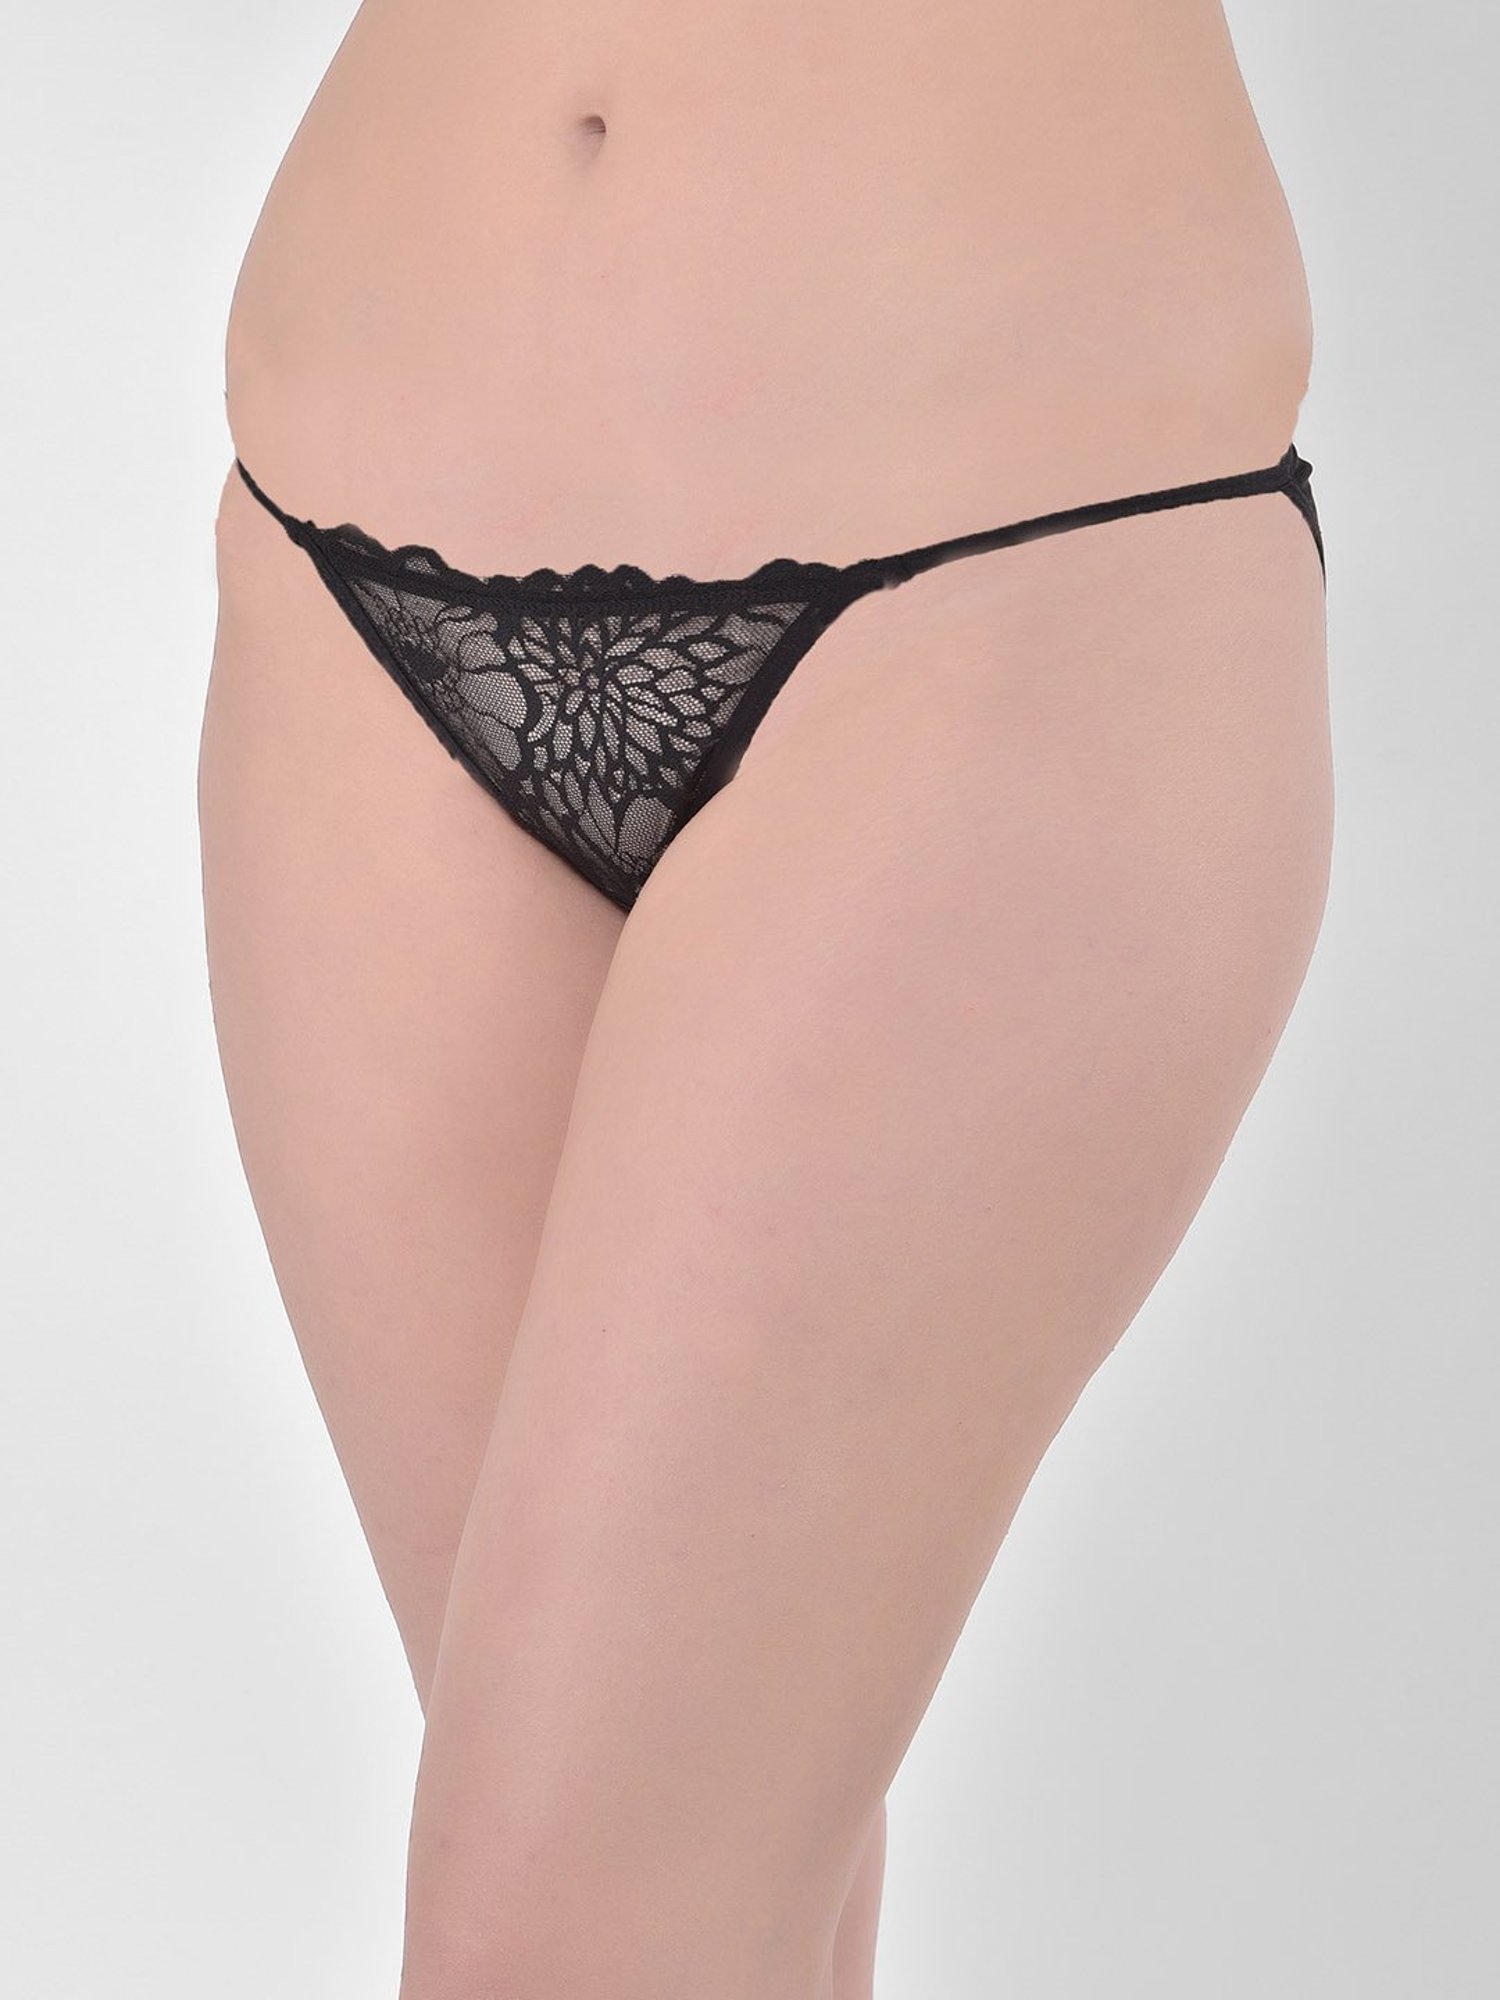 Buy Friskers Black Thong Panty for Women's Online @ Tata CLiQ